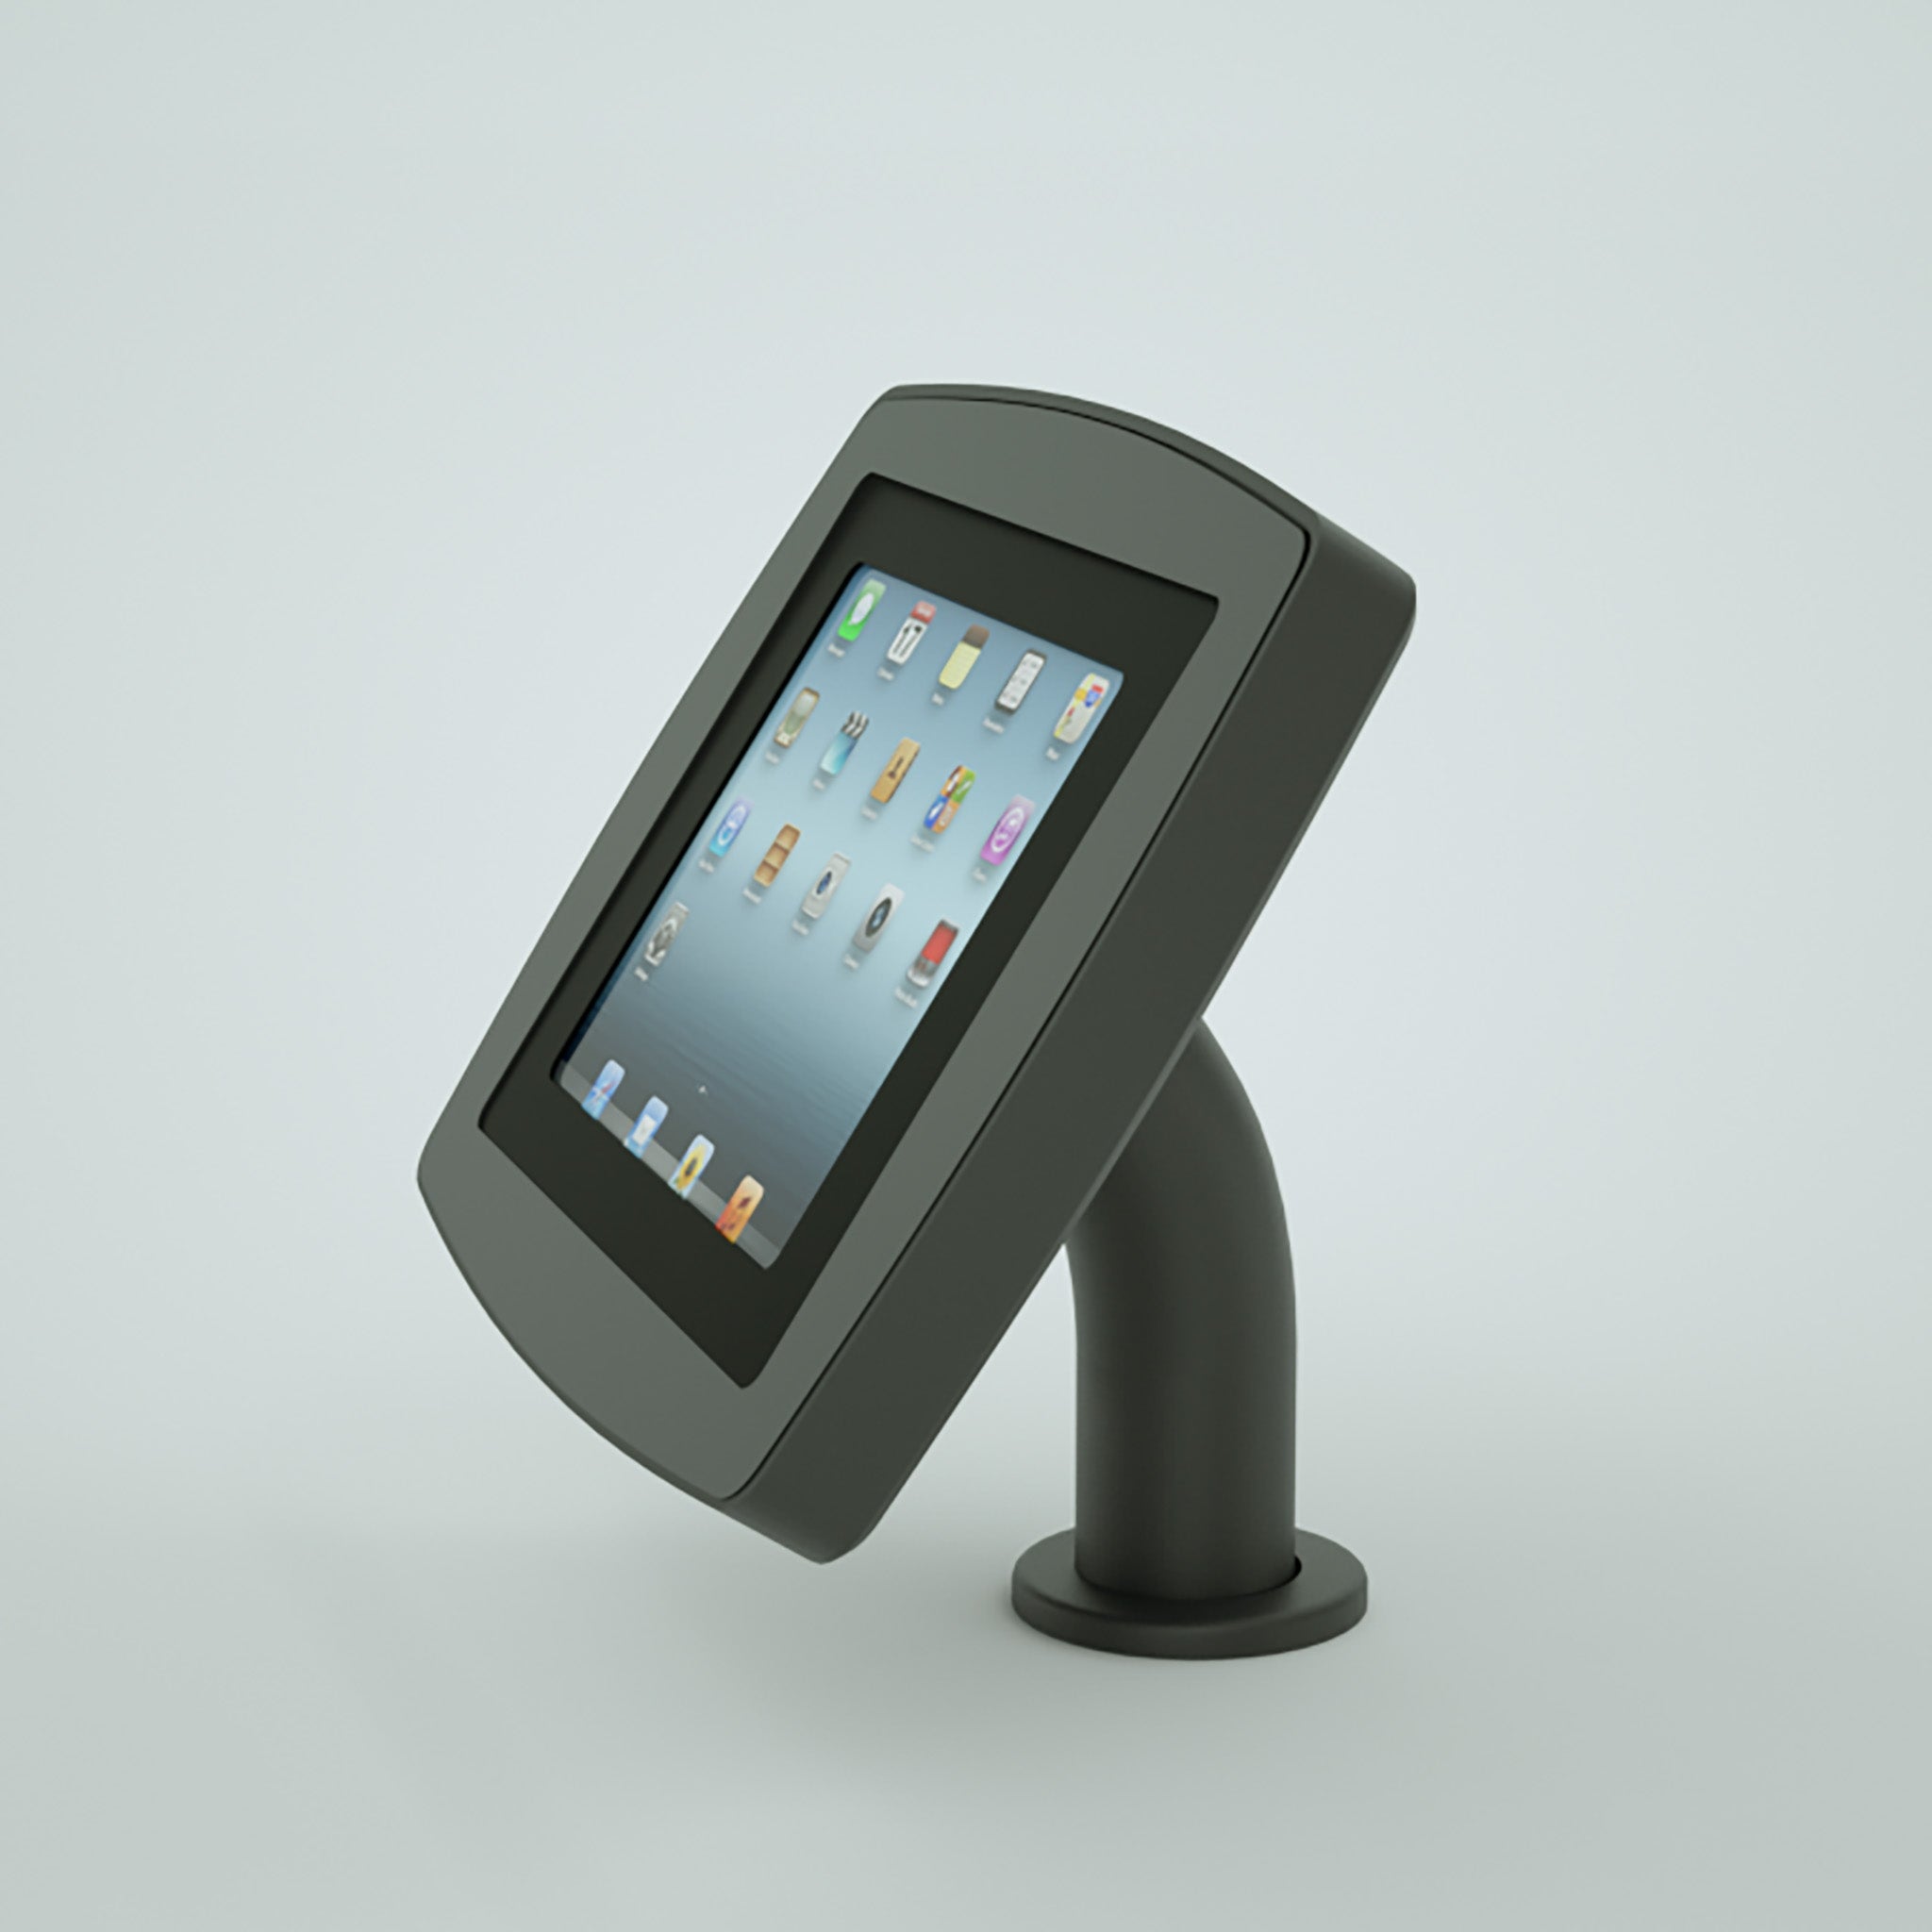 MEMO SAVER® - Clé USB portable pour Iphone, Ipad, Android, Windows